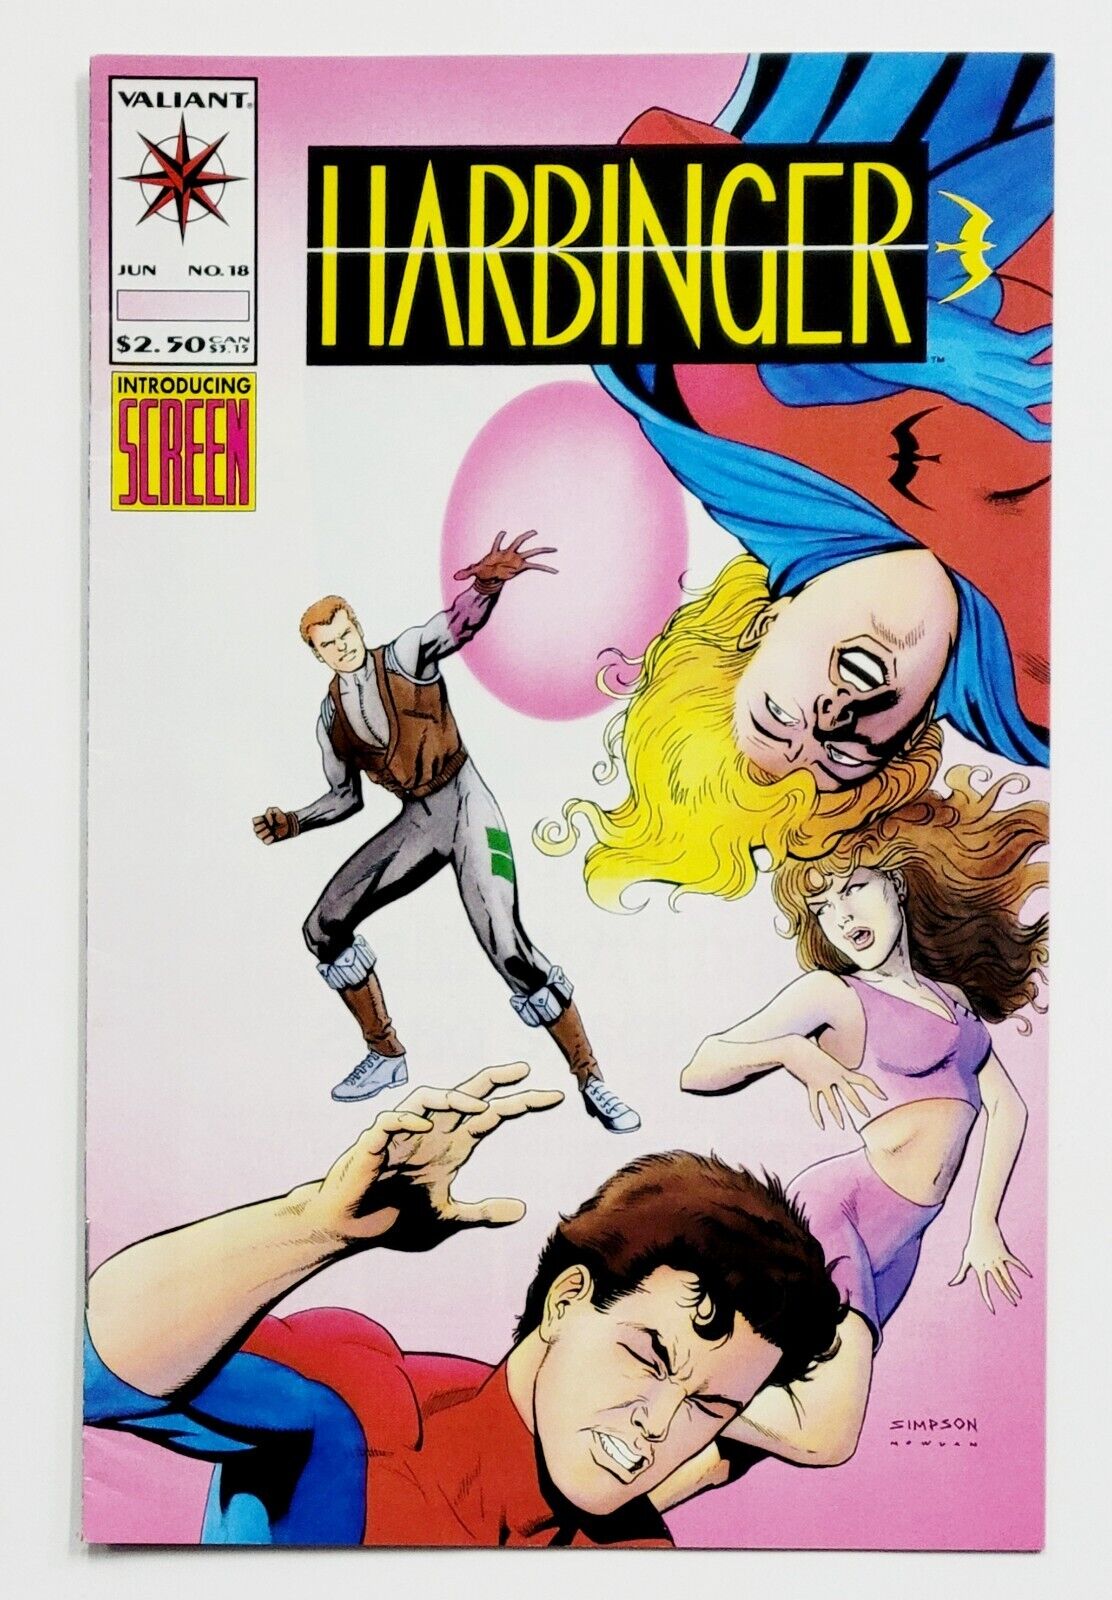 HARBINGER #18 - 1993 Valiant Comics 1st App of Screen - VGC